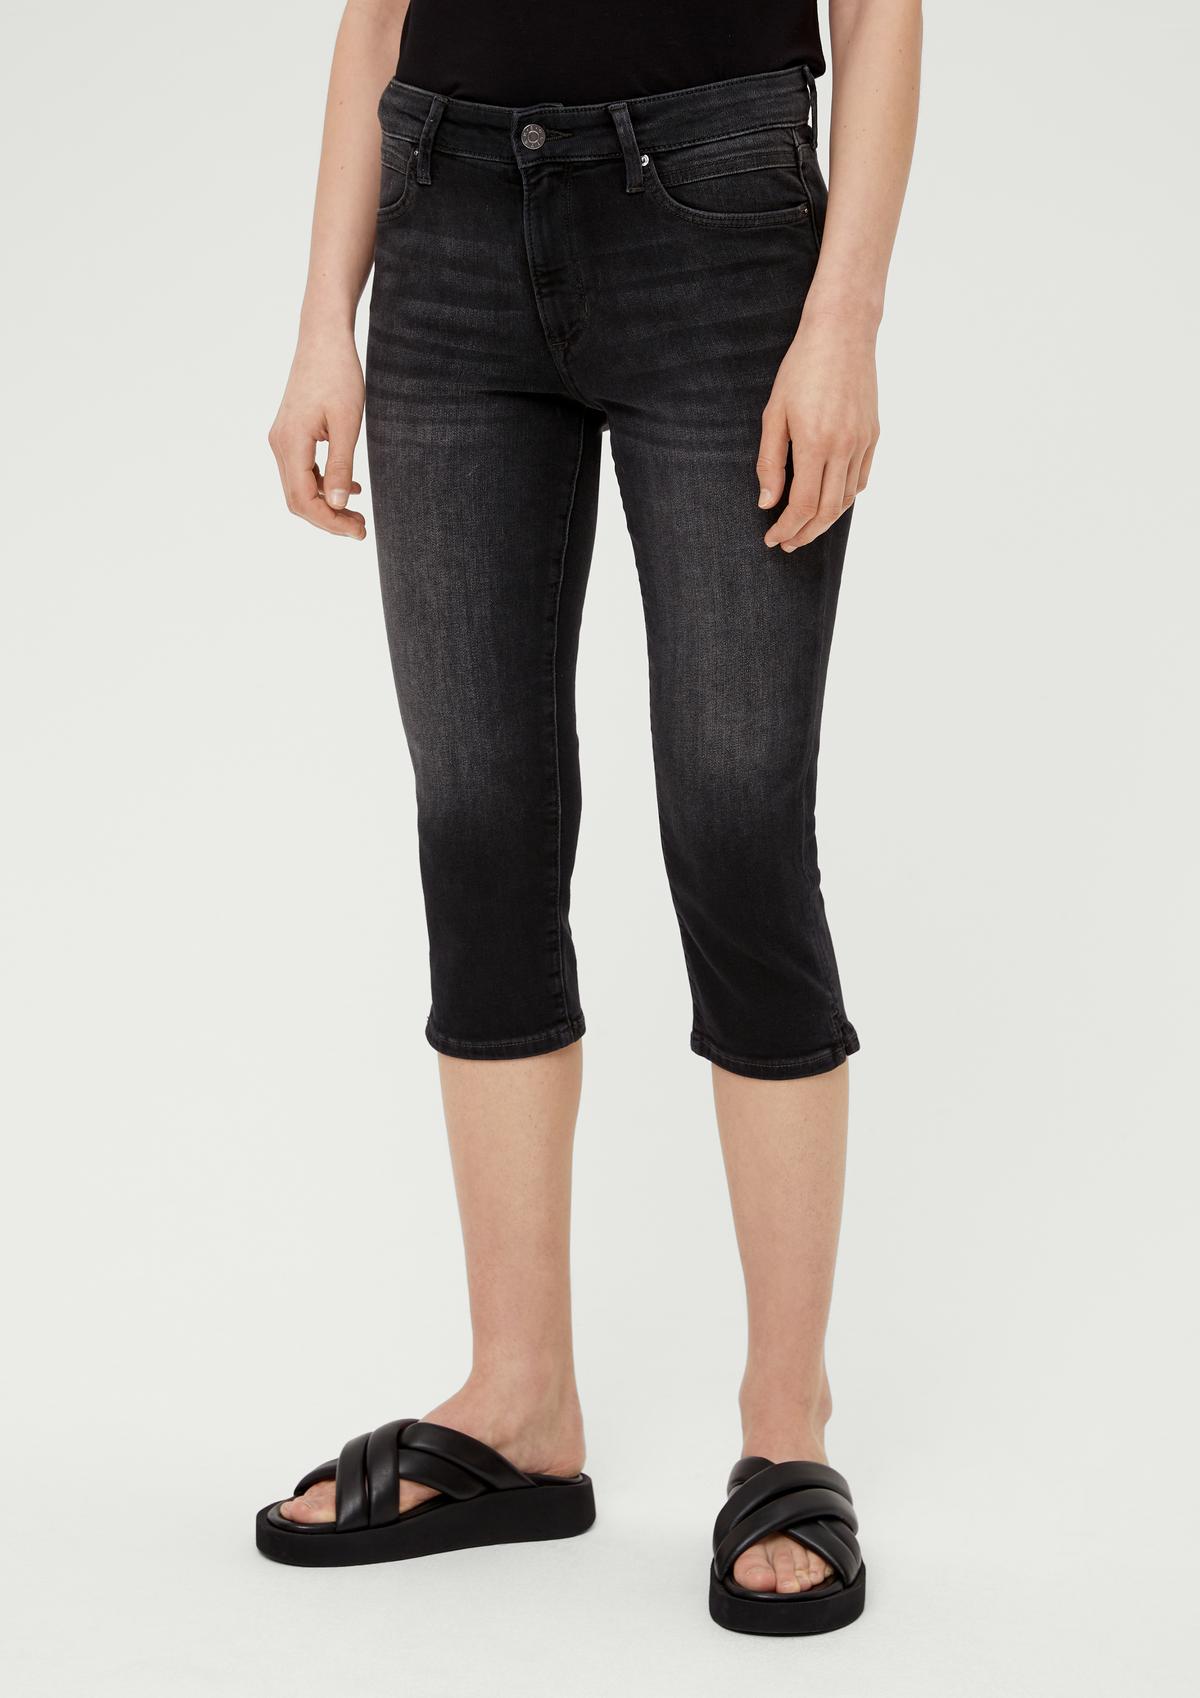 s.Oliver Betsy ankle jeans / slim fit / mid rise / slim leg